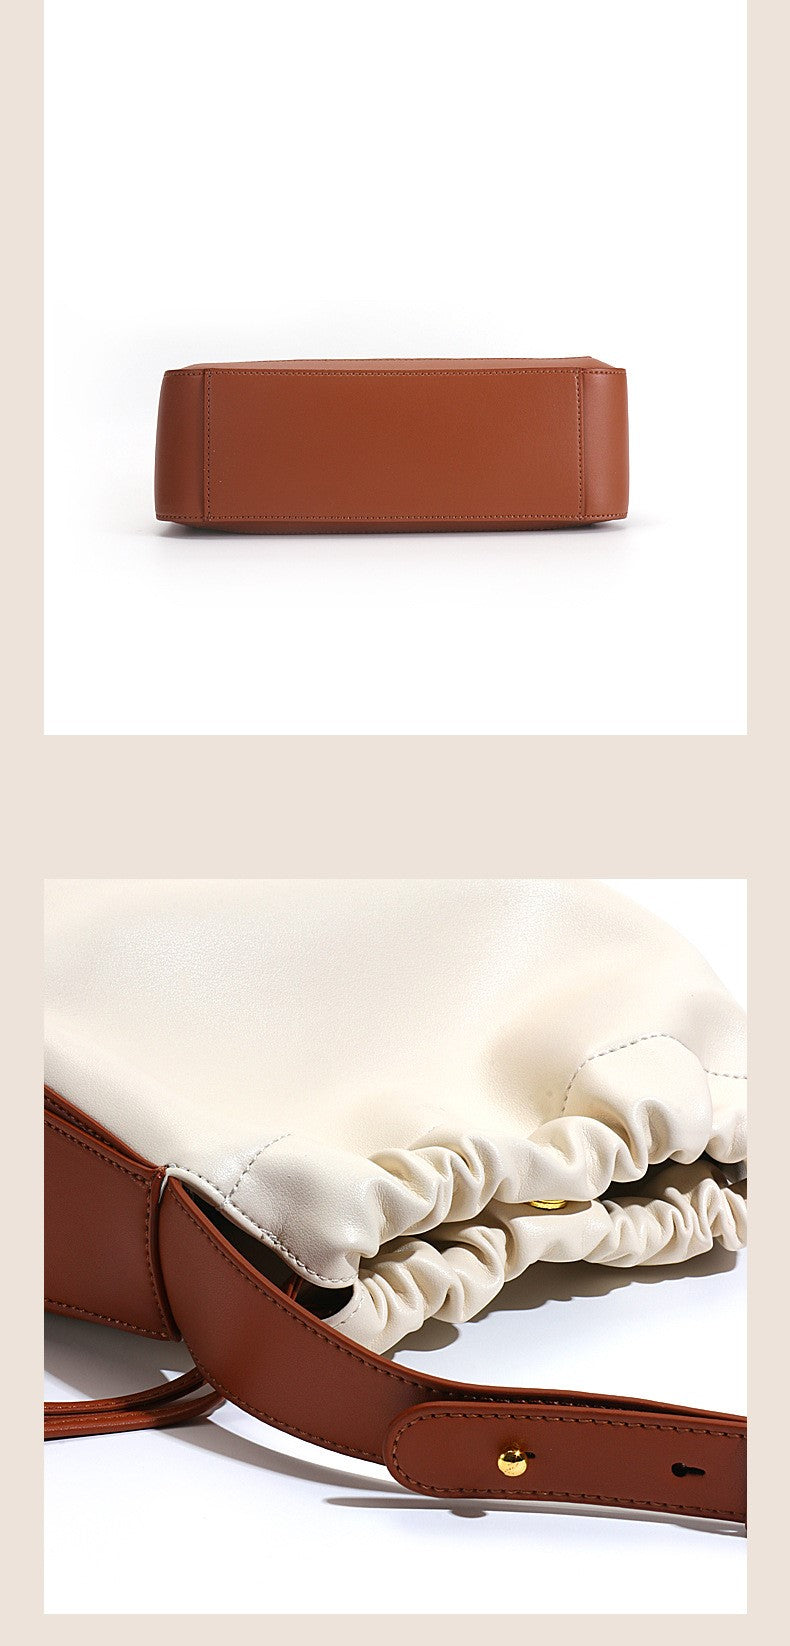 HIMODA soft leather drawstring bag - detail 4